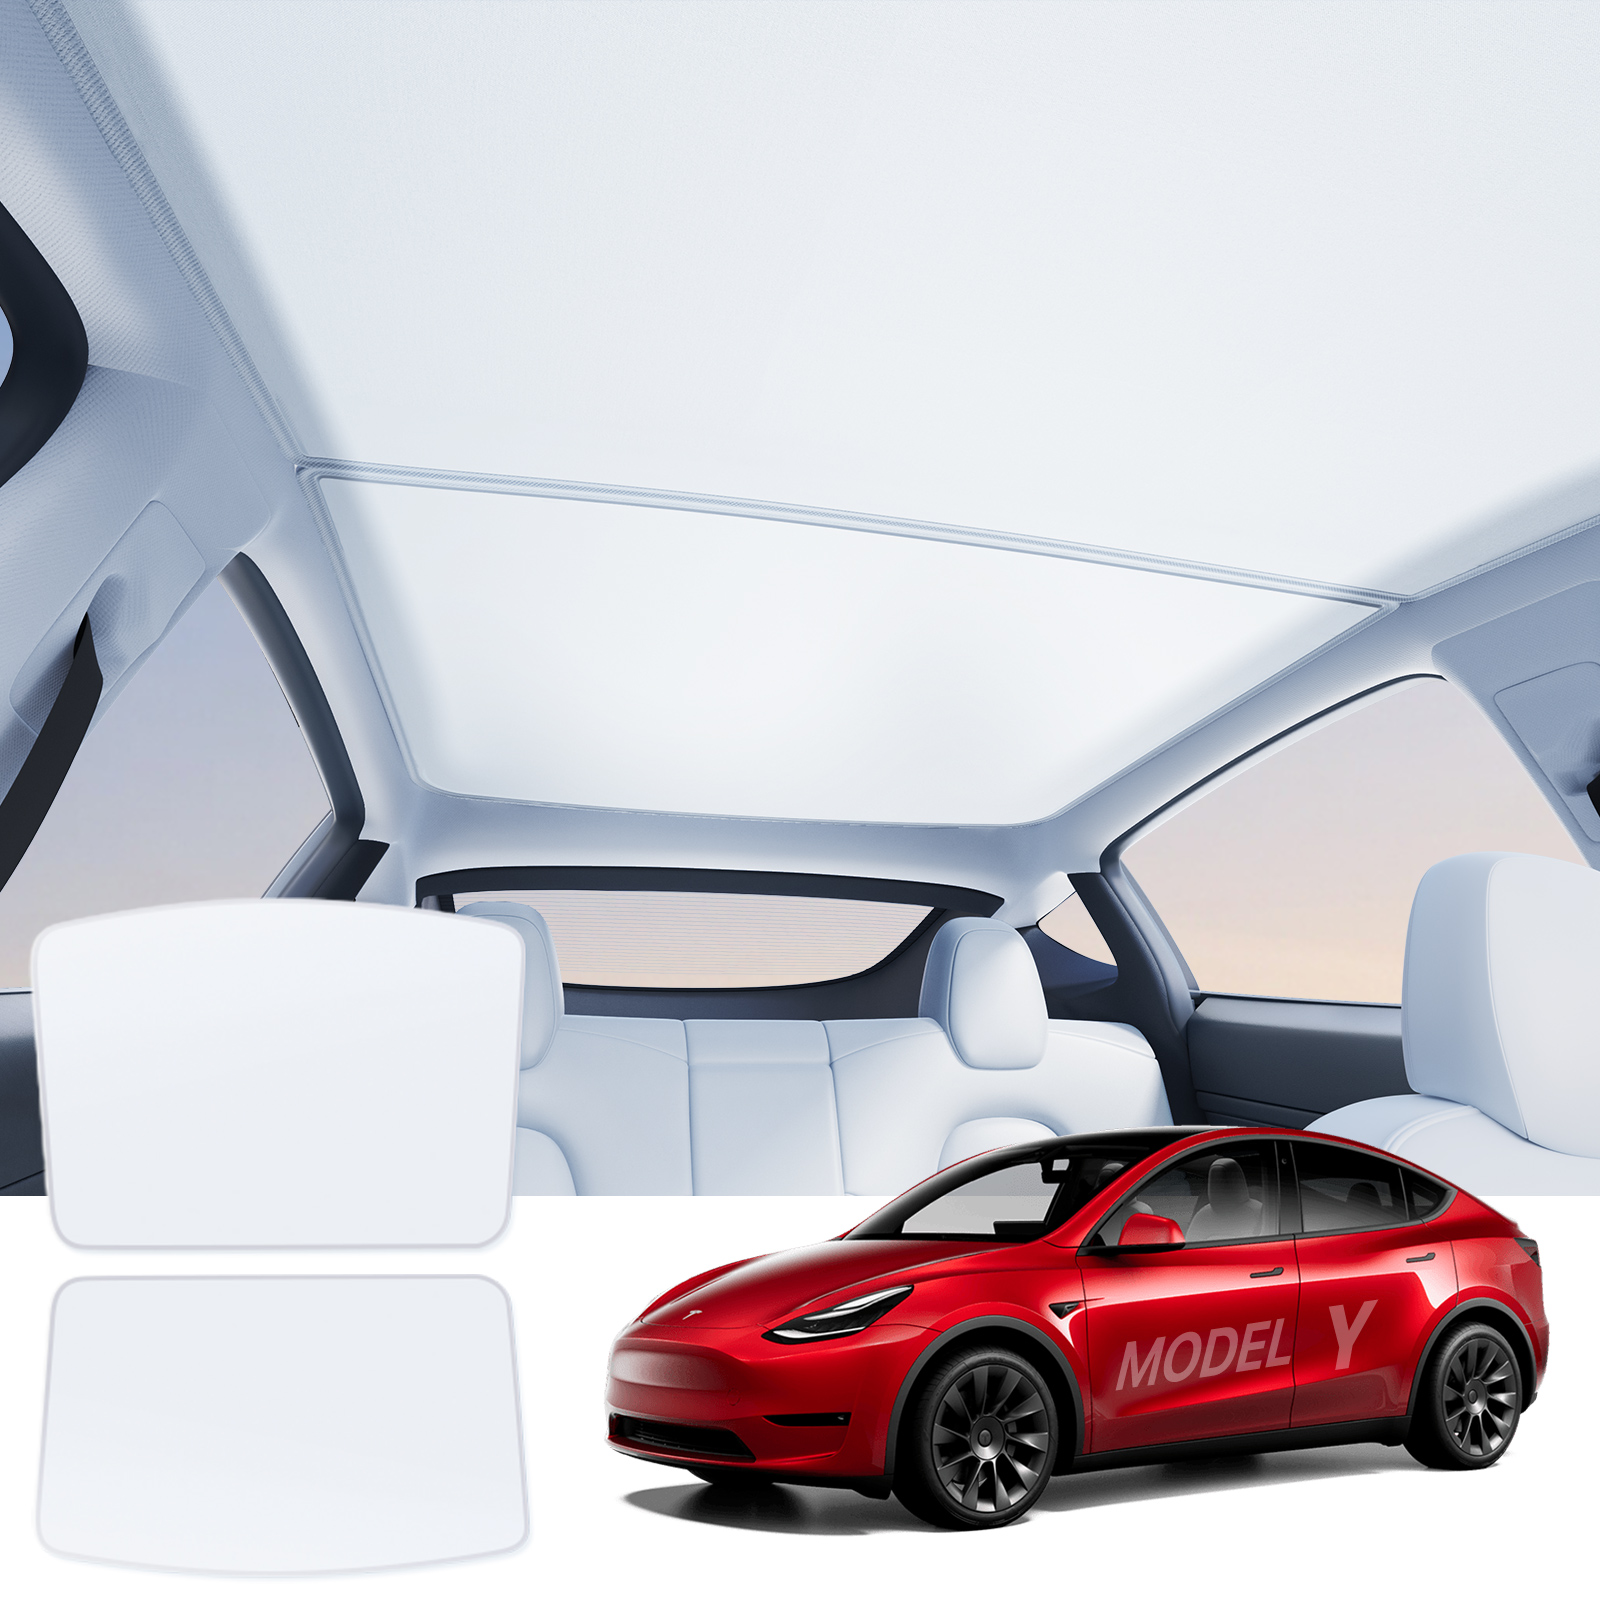 Andobil Tesla Model Y roof Sunshade